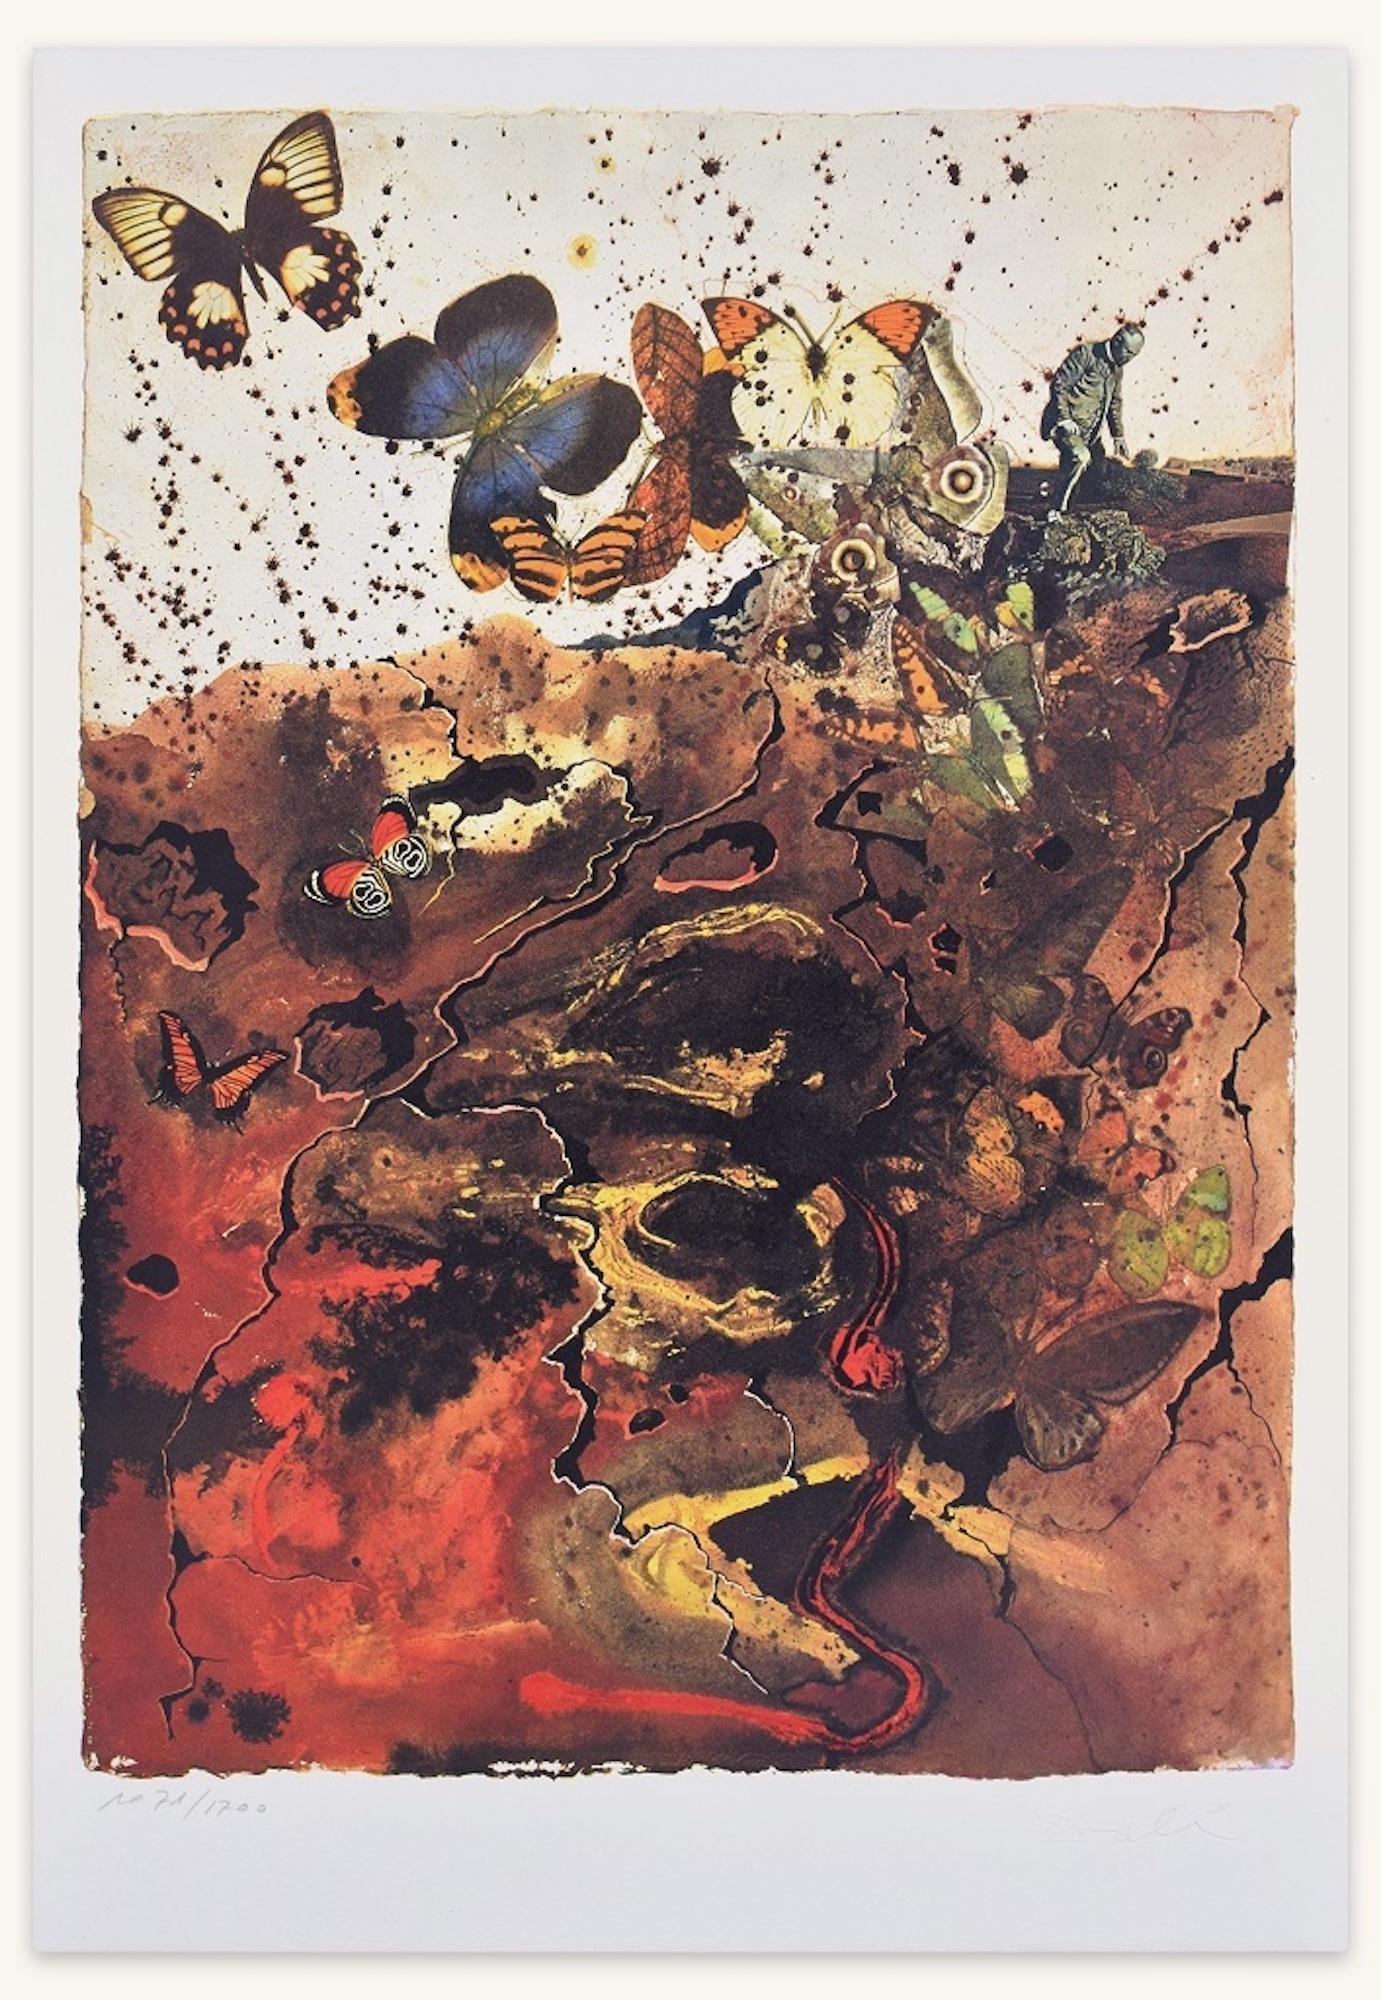 Salvador Dalí Print - Plate VI - From "Suite Papillon" - Original Lithograph and Heliogravure - 1969